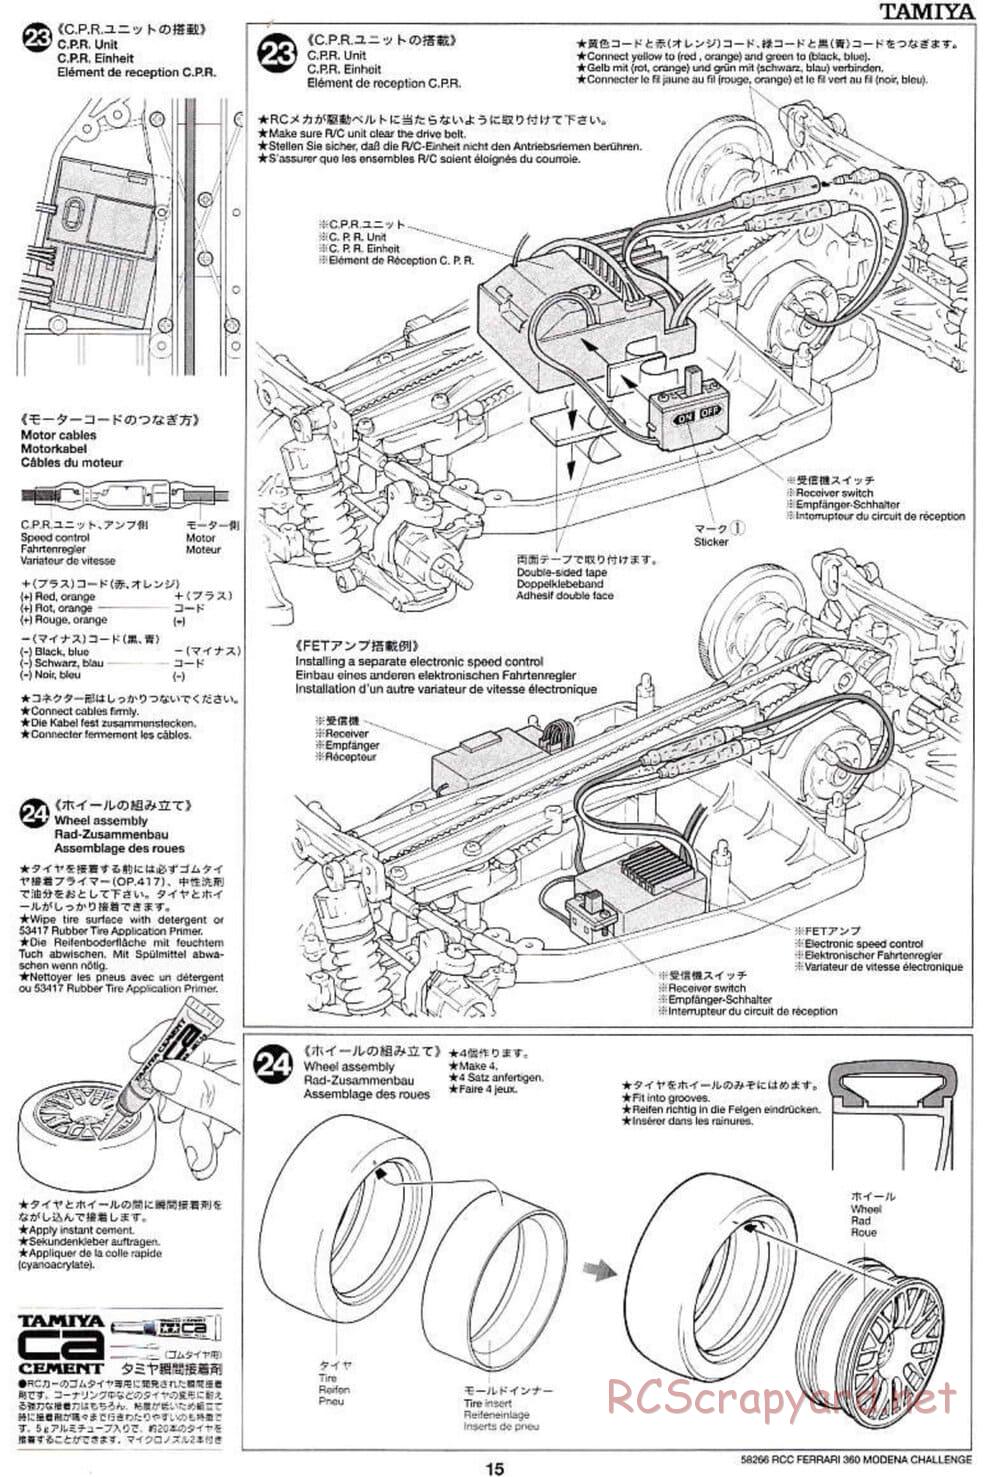 Tamiya - Ferrari 360 Modena Challenge - TA-04 Chassis - Manual - Page 15